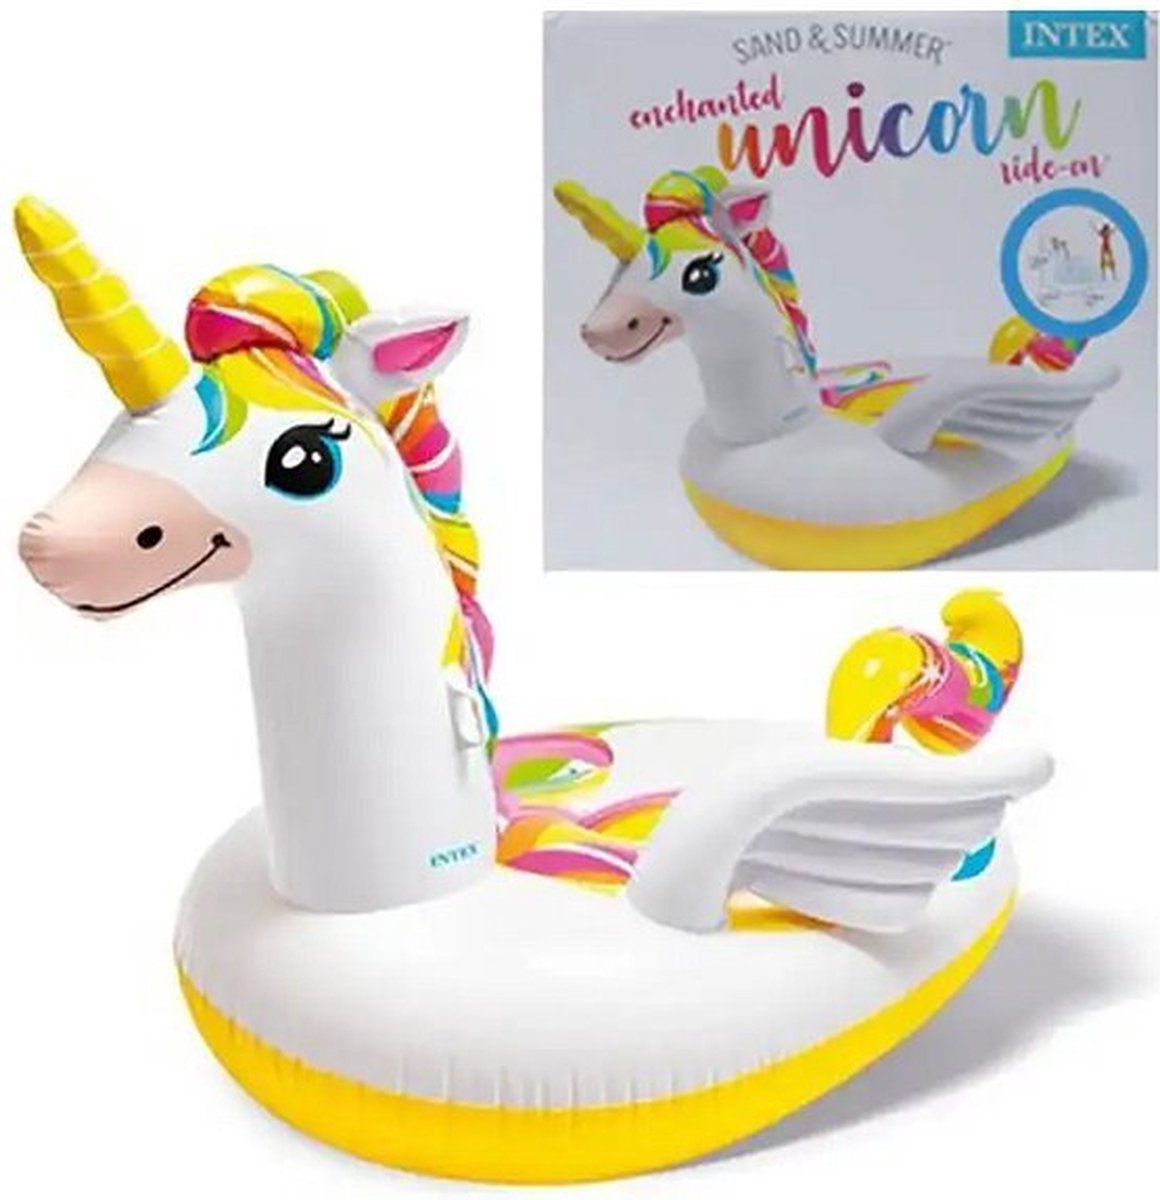 Intex Enchanted Unicorn Ride-ON - Age 3+ - Intex